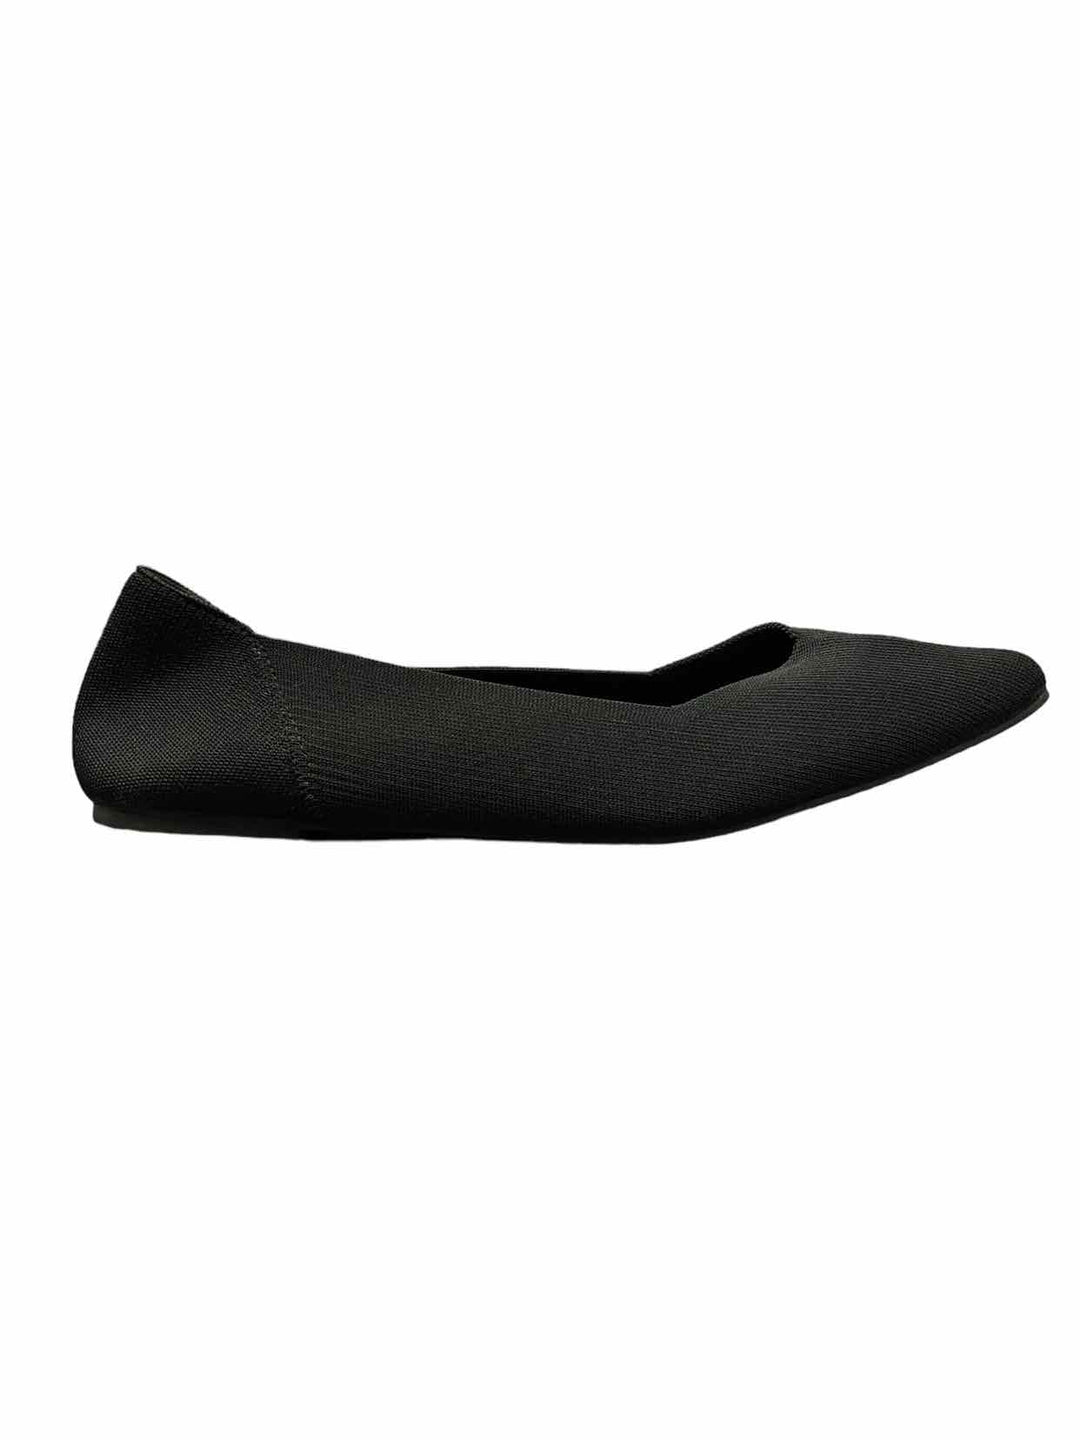 Mia Shoe Size 10 Black Flats